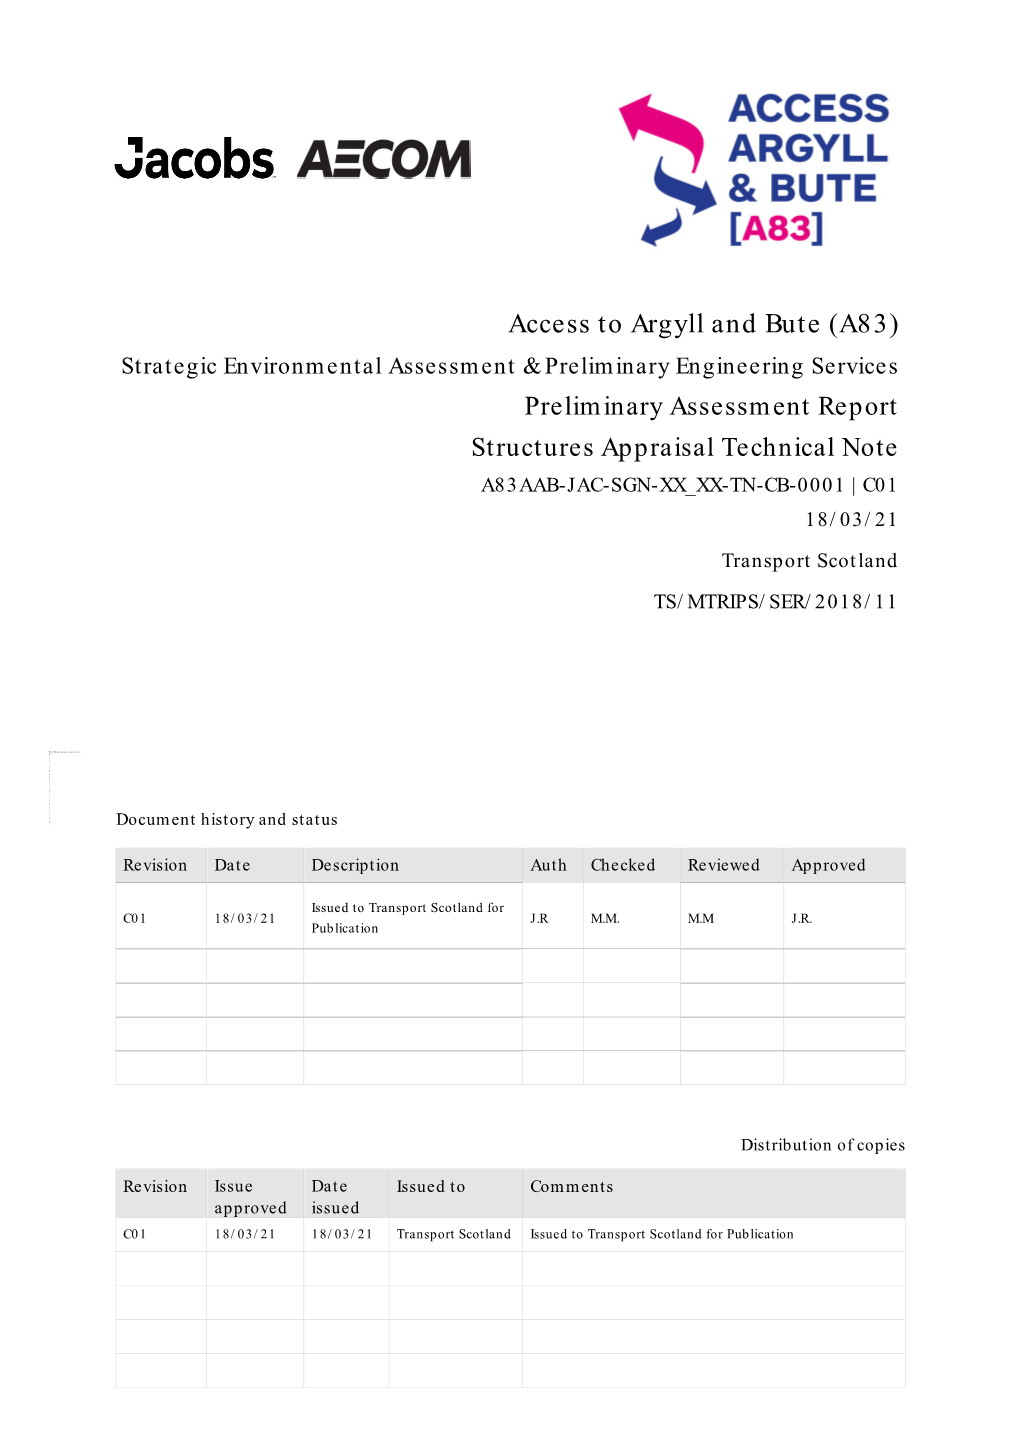 View Preliminary Assessment Report Appendix G